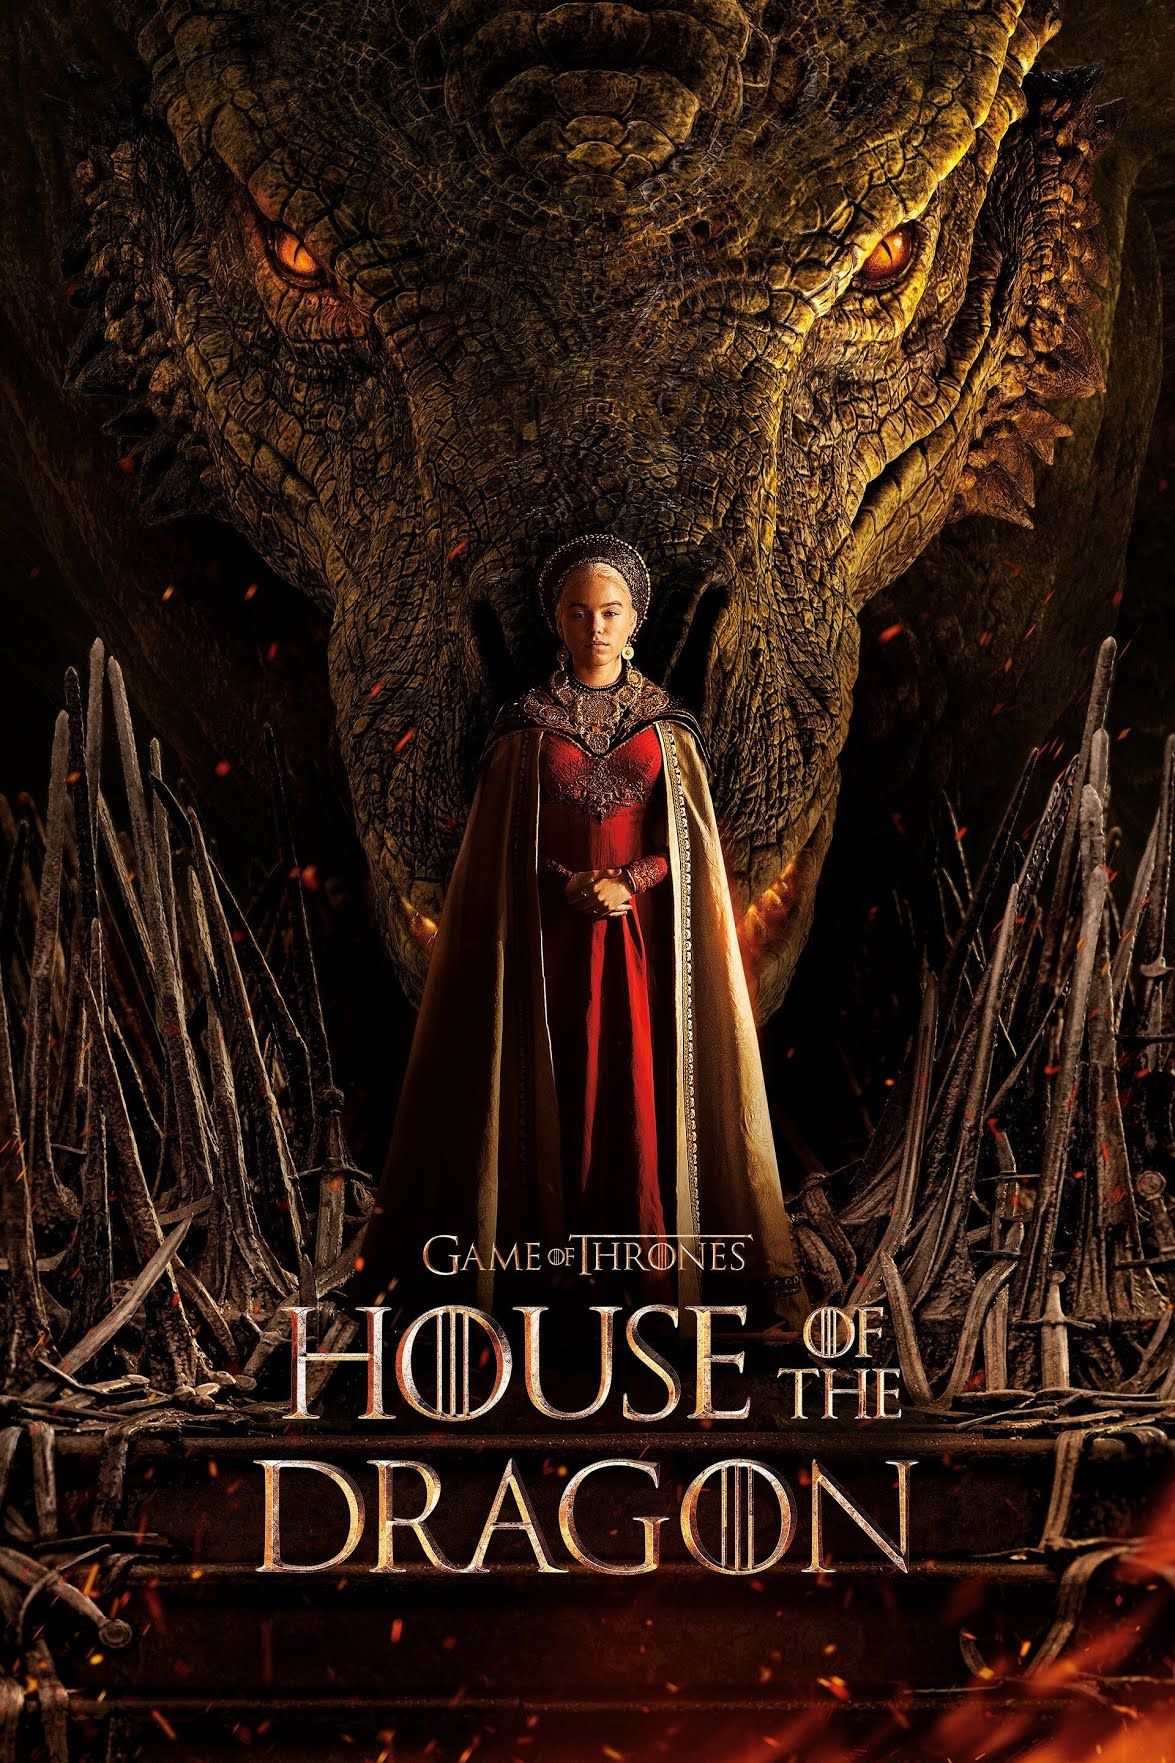 House of the Dragon (Season 1) Hindi Dubbed HBO Series HDRip 720p 480p